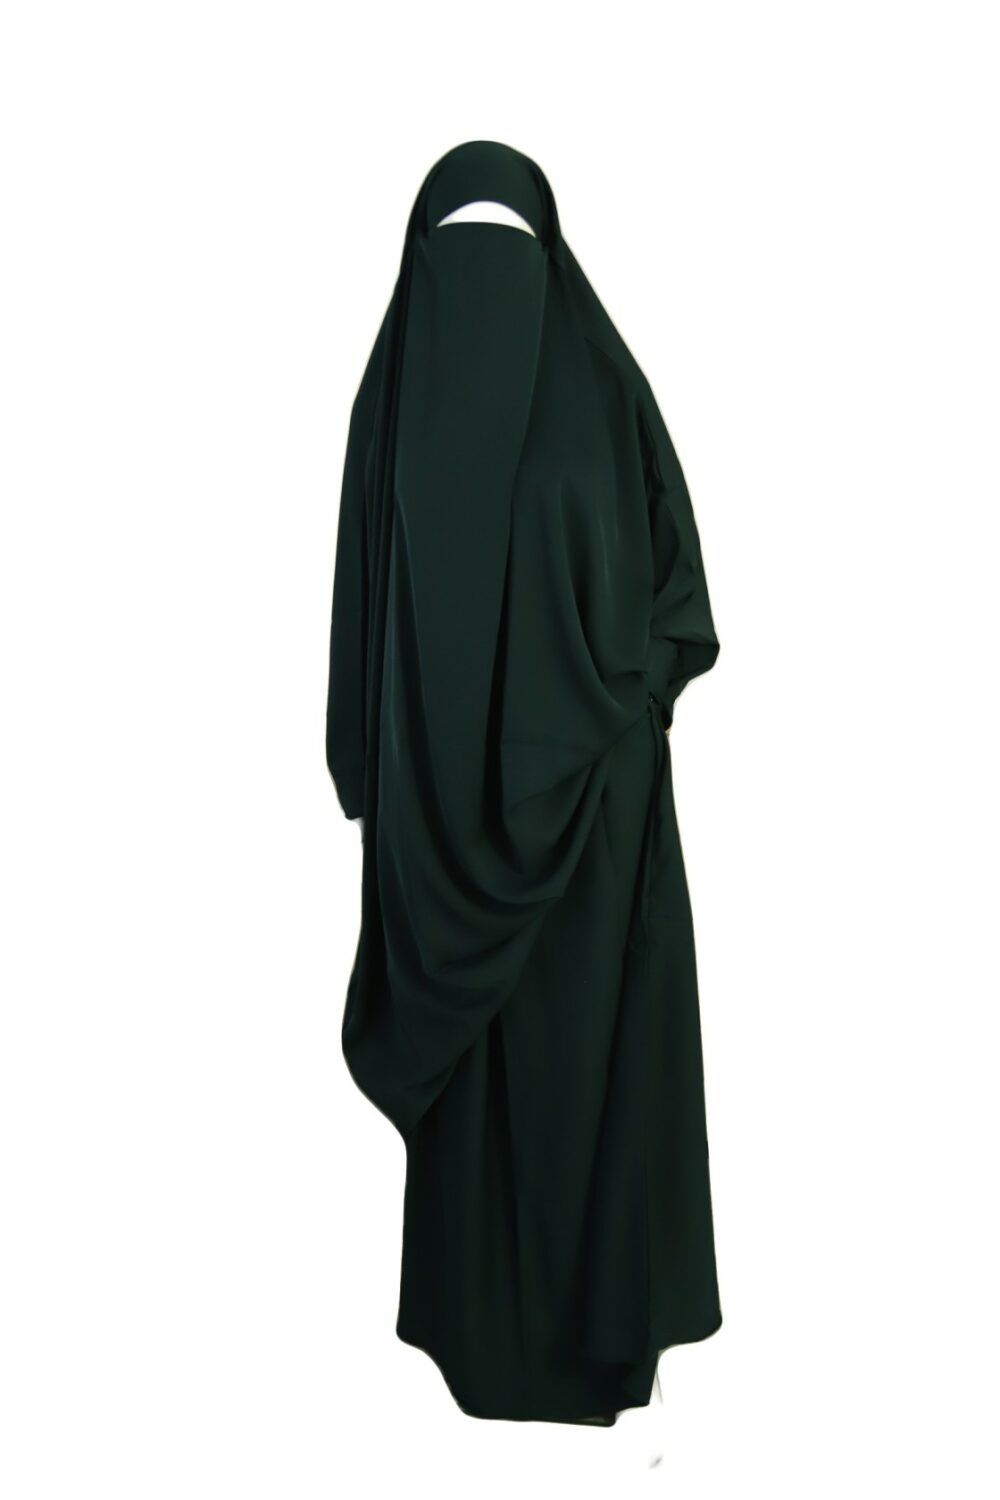 2 Piece Green Jilbab